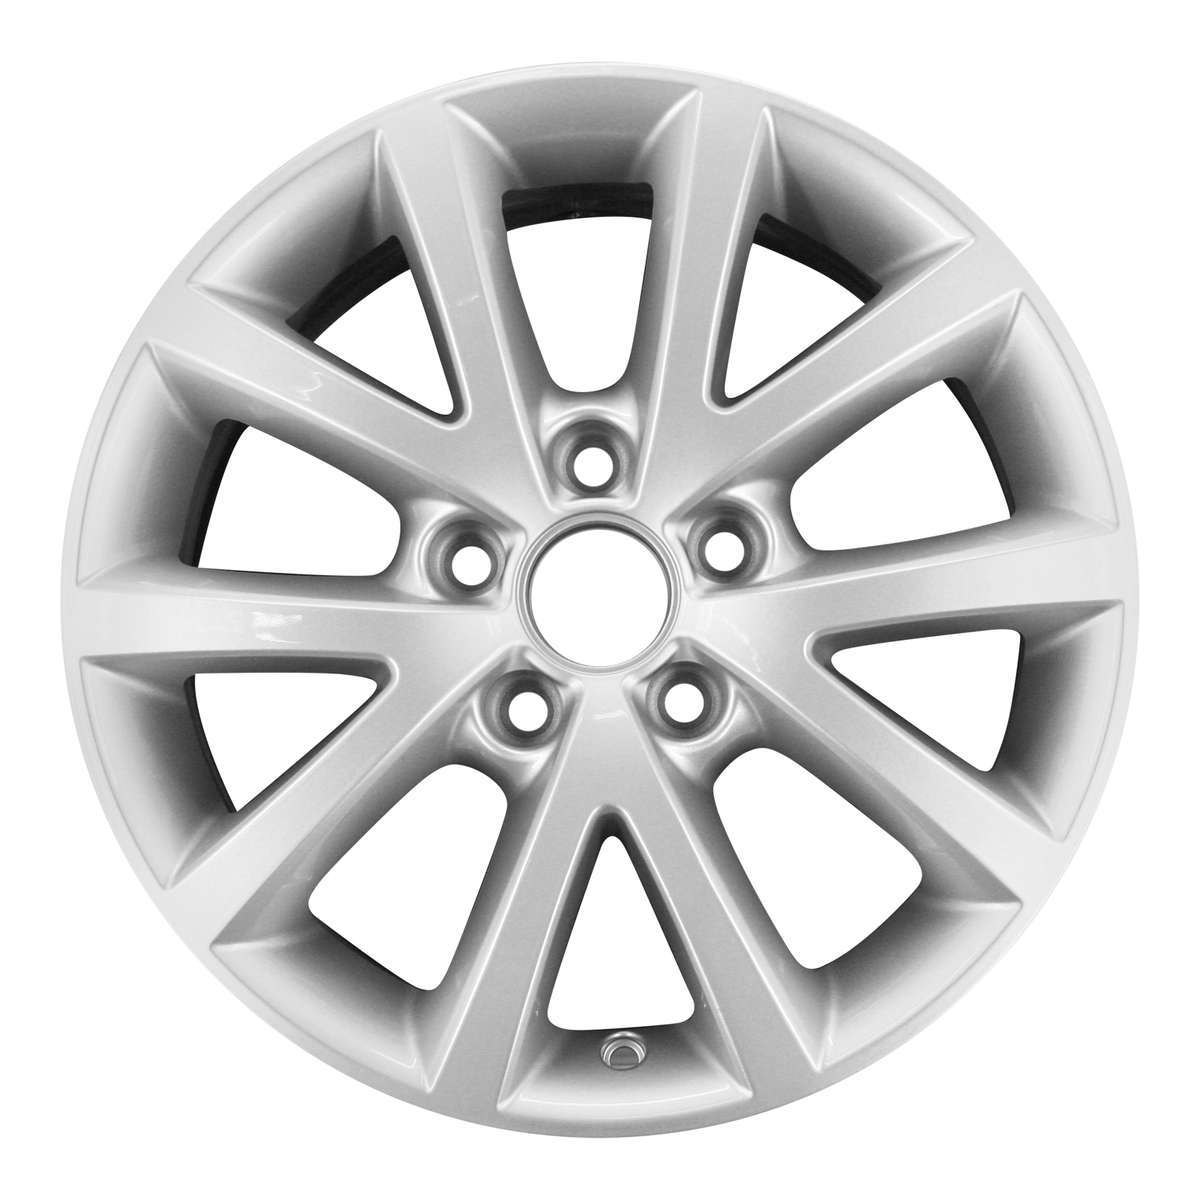 2012 Volkswagen Jetta New 16" Replacement Wheel Rim RW69897S